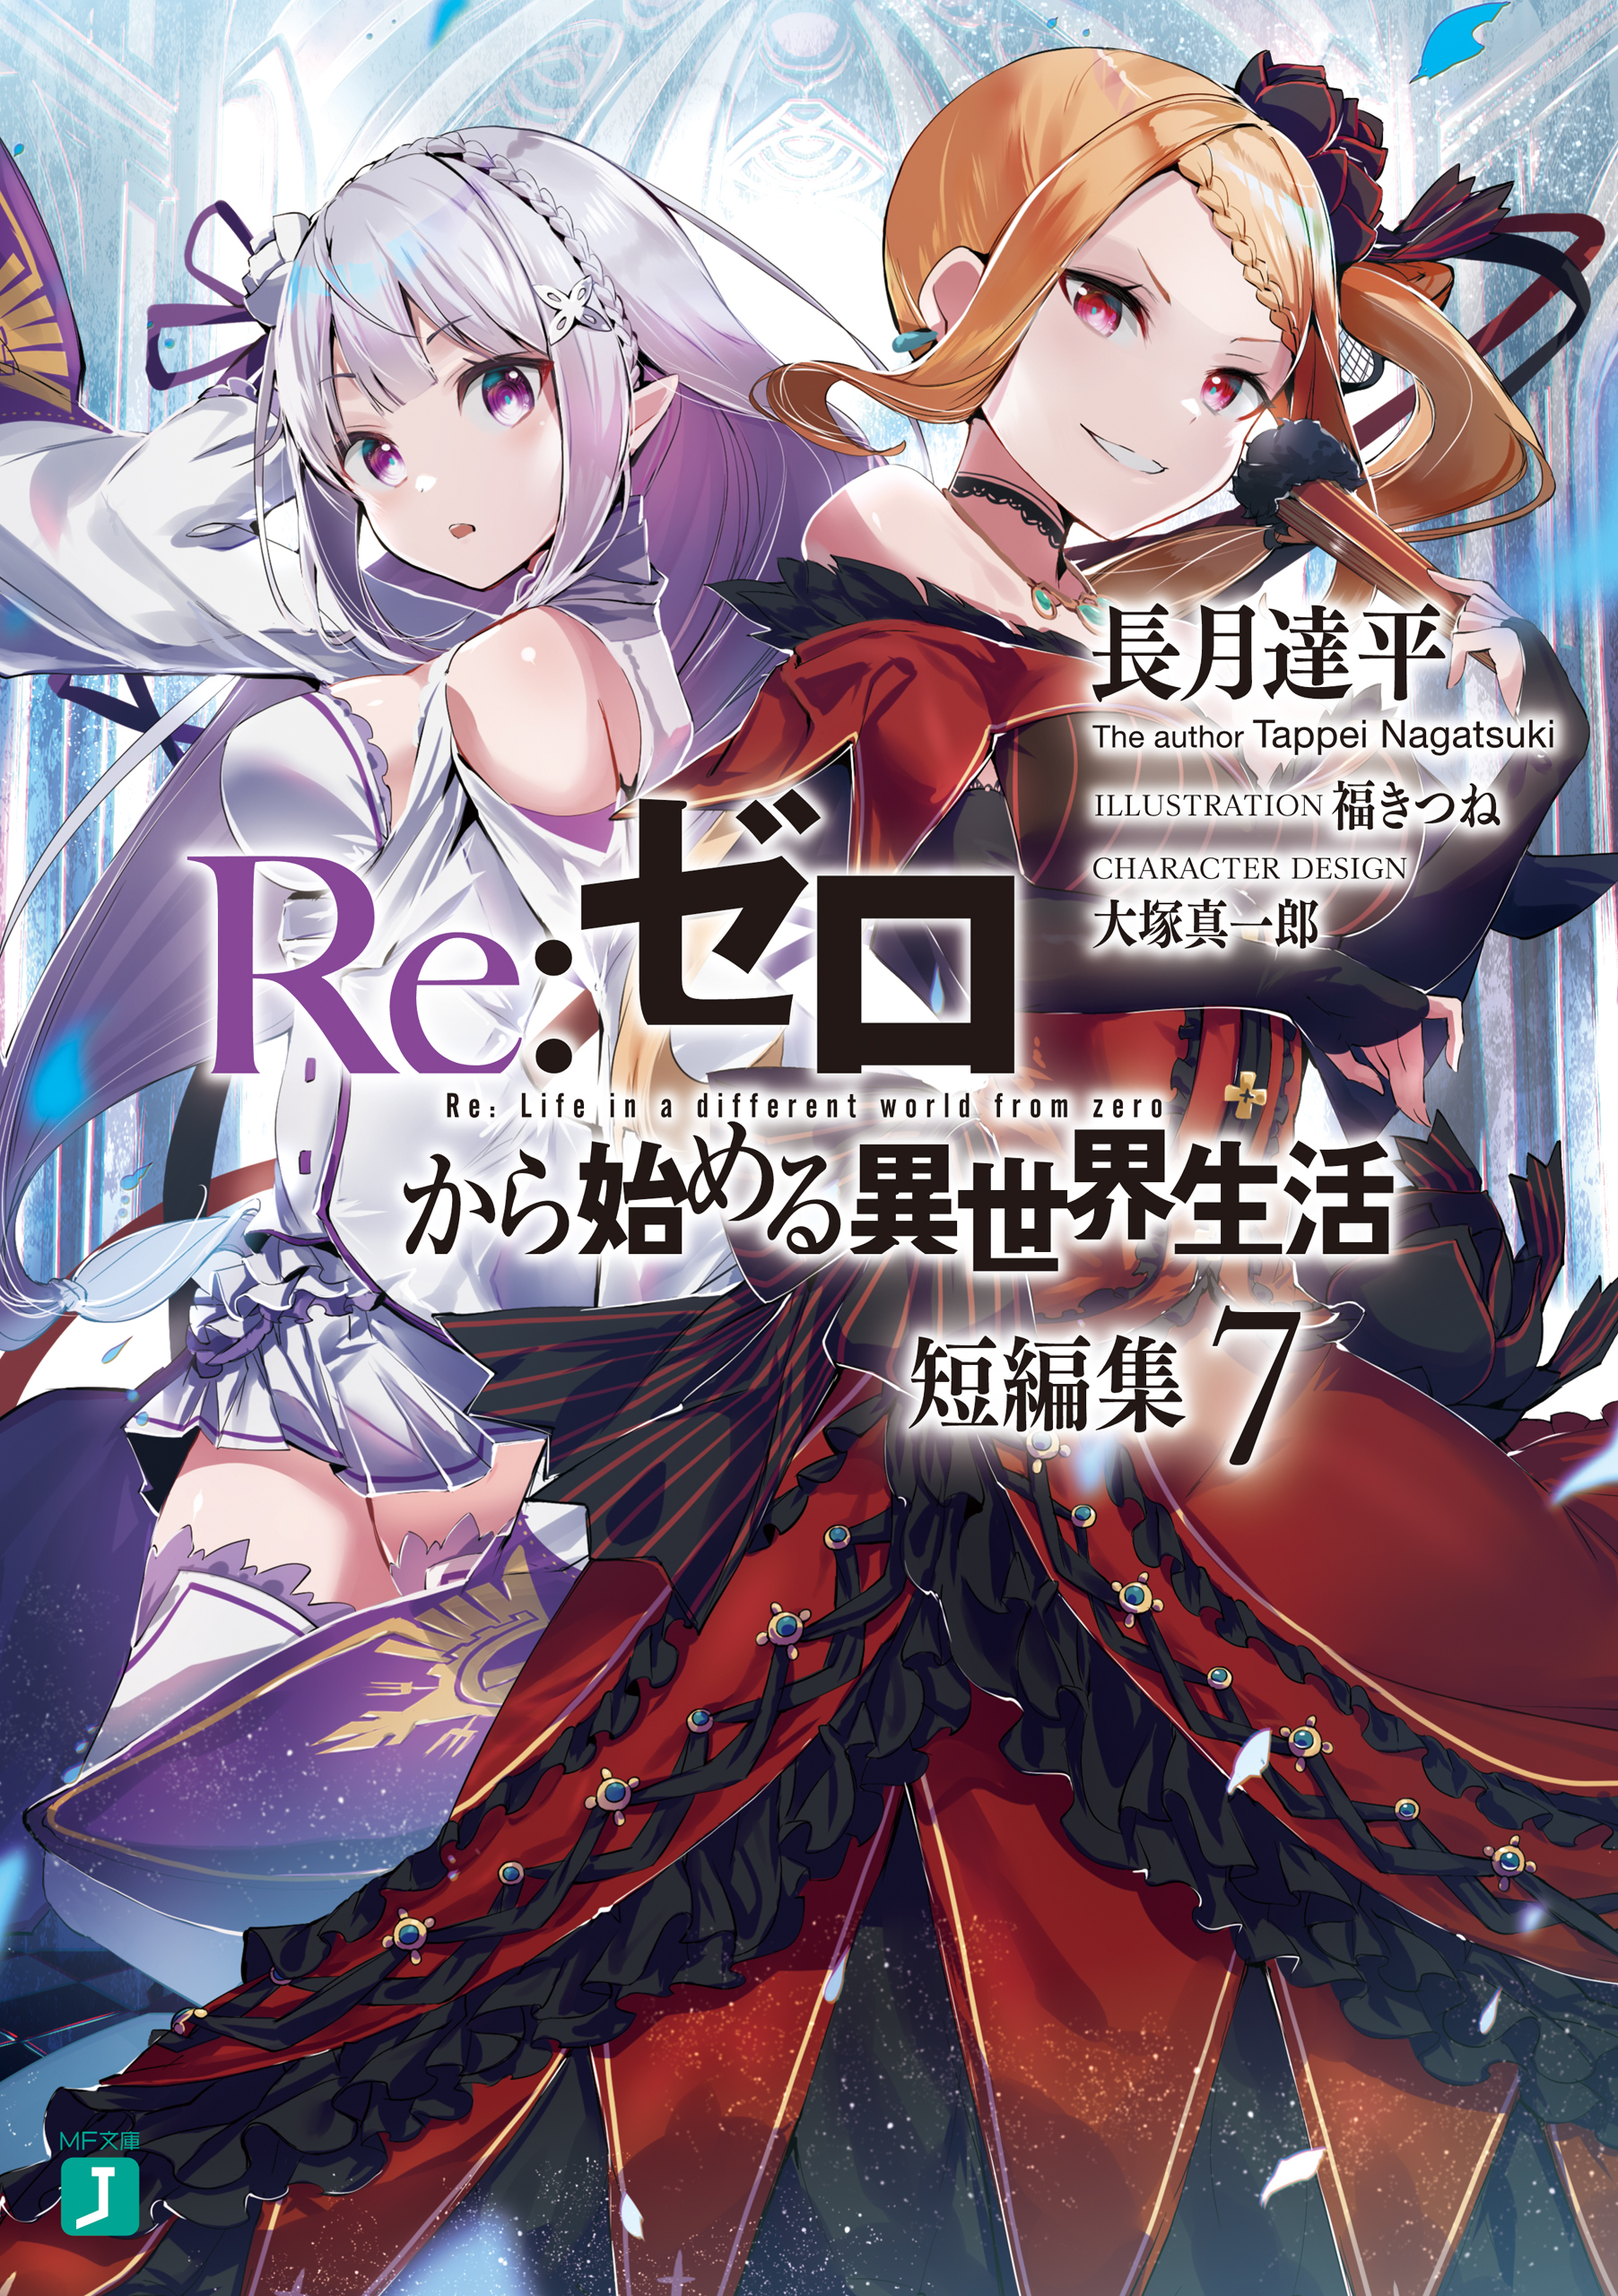 Re:ゼロから始める異世界生活 リゼロ 小説 36冊セット 全巻 - 本